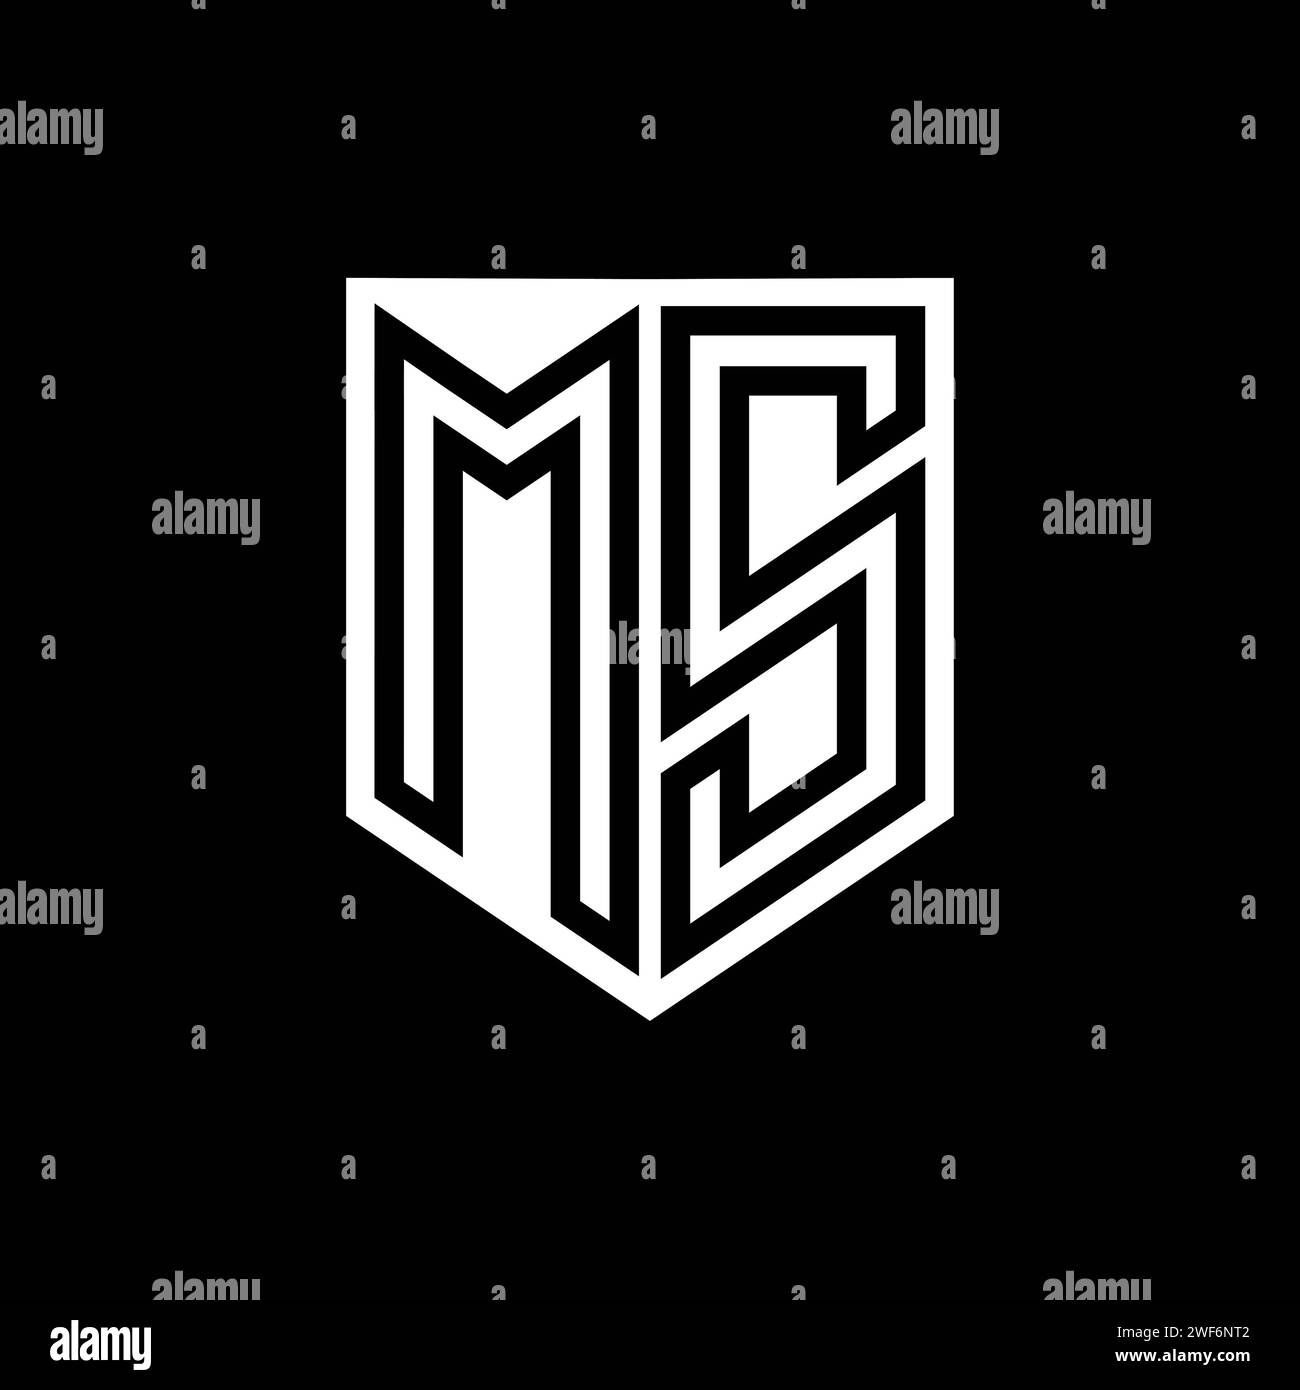 MS Letter Logo monogram shield geometric line inside shield style design template Stock Photo